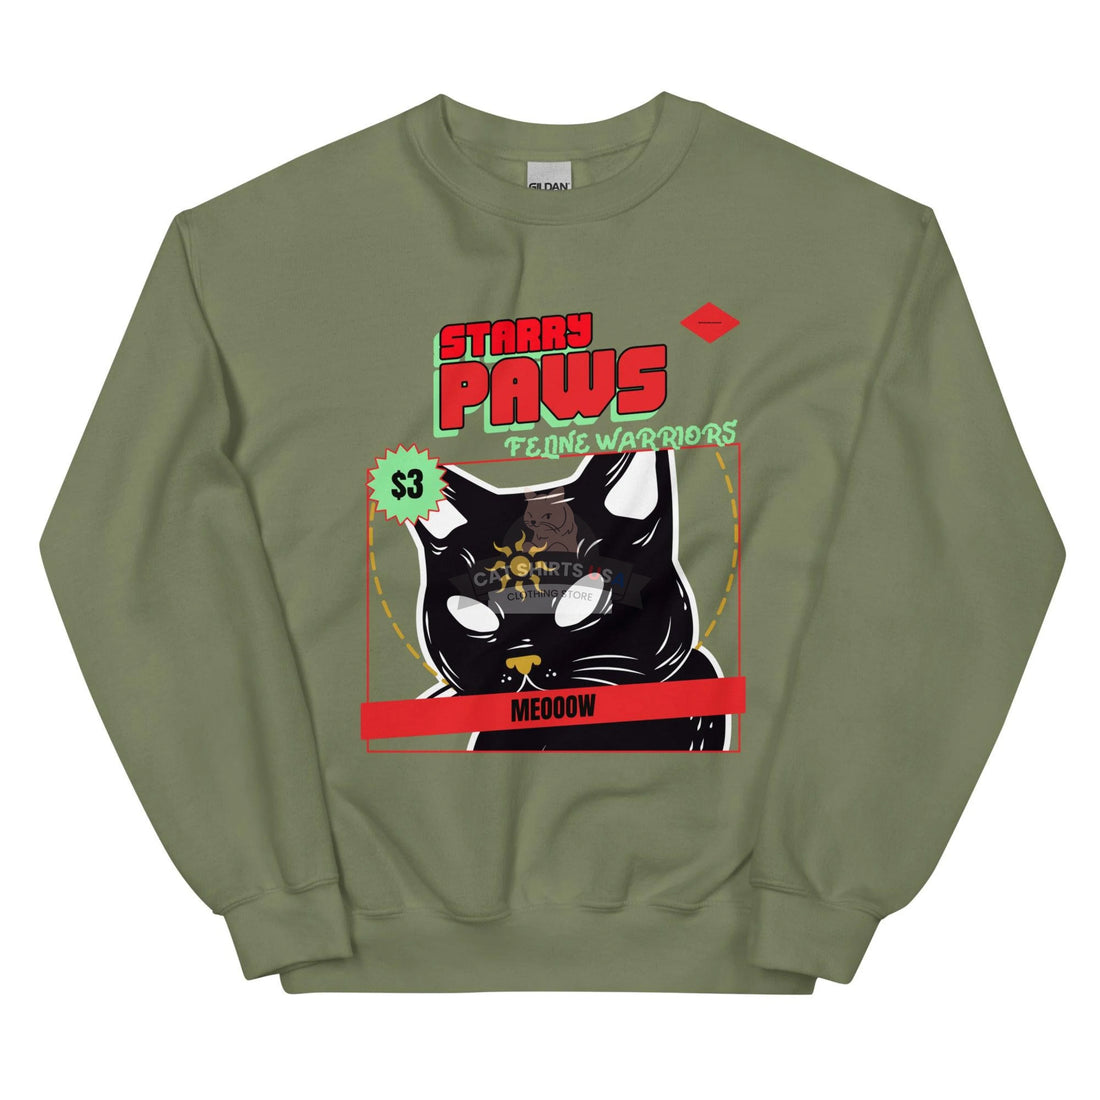 Starry Paws Cat Sweatshirt - Cat Shirts USA